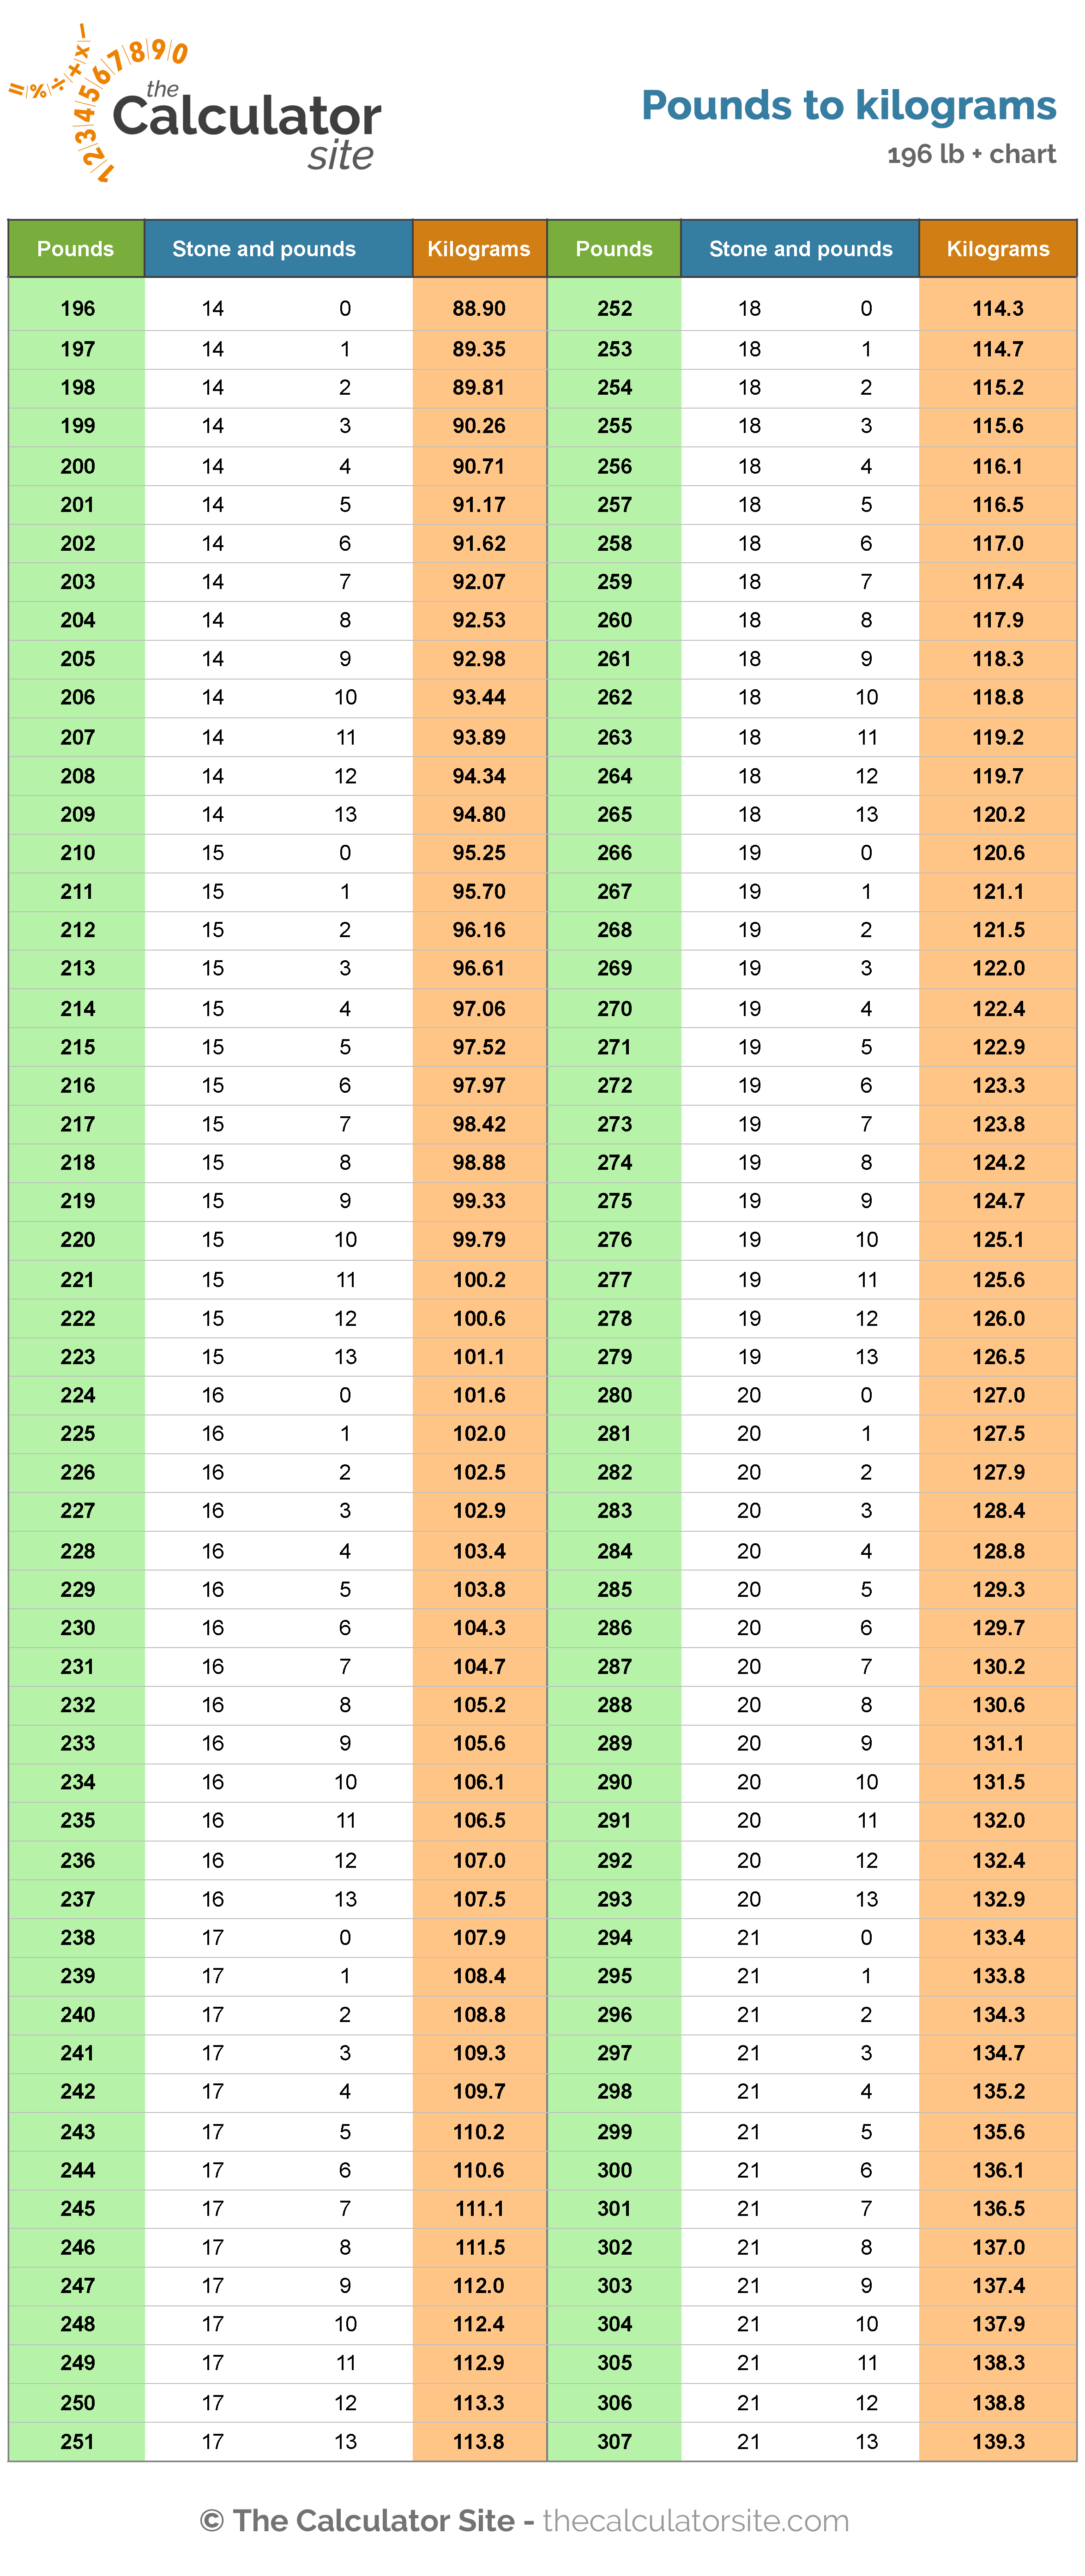 Pounds, stone and kilograms chart 2 (196 lb +)